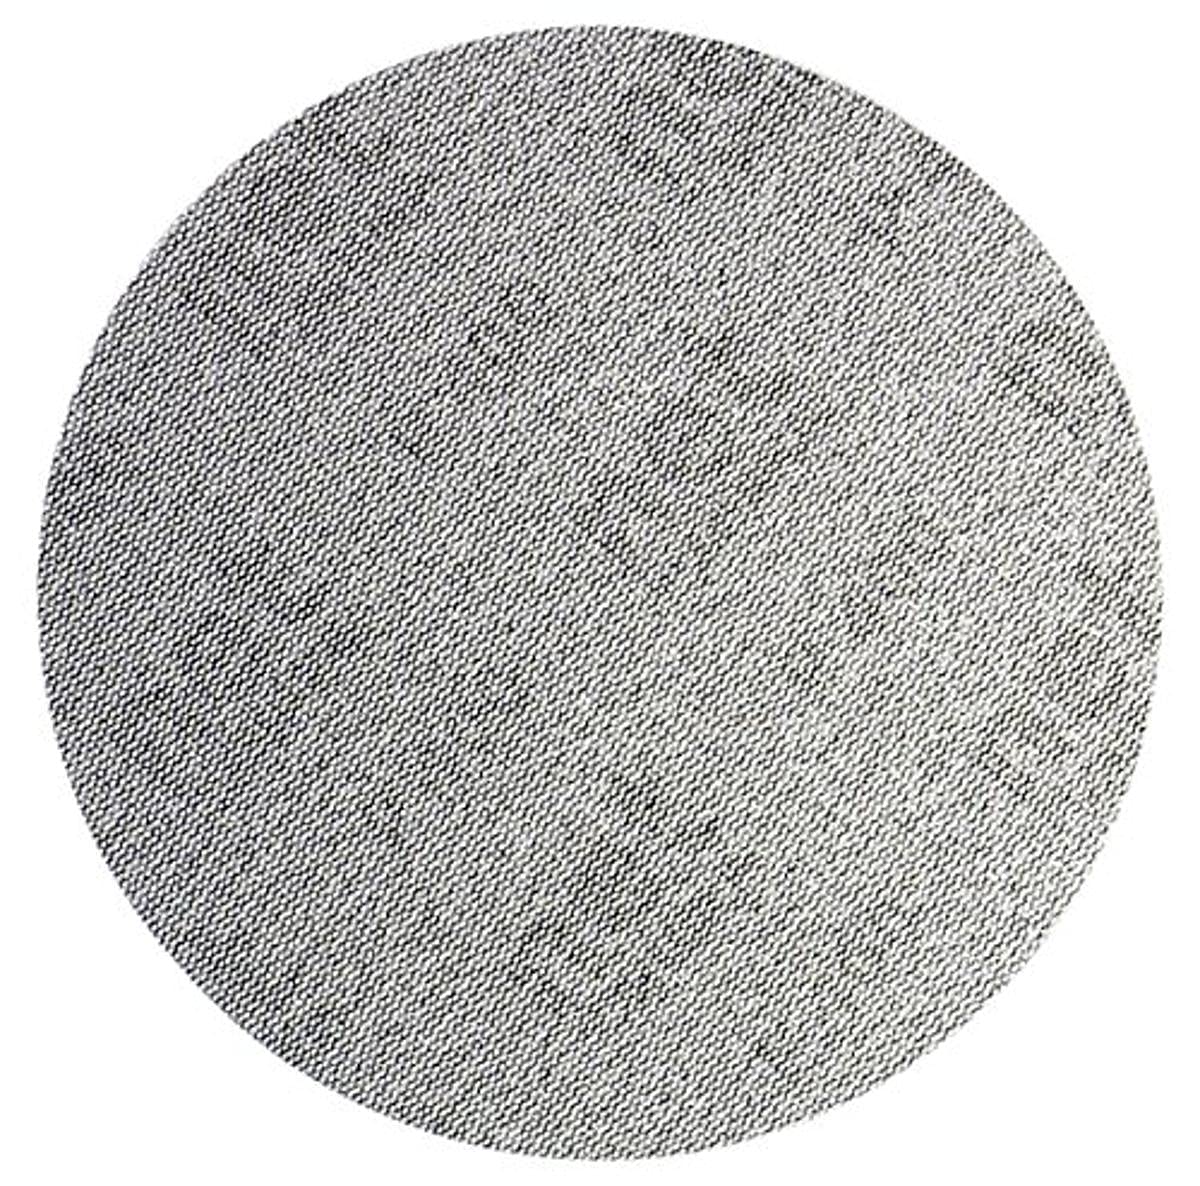 Mirka AE24105080 Autonet Sanding Disc - 150mm Grip - P80 Grit - Körnung: Aluminiumoxid auf Kunstharz über Kunstharz - PA Netz / PES Netz - Beschichtung: Geschlossen - Grau - Packung enthält 50 Stück von MIRKA